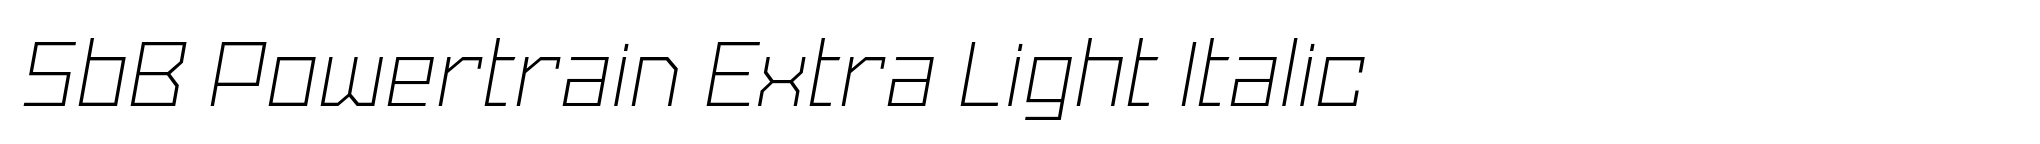 SbB Powertrain Extra Light Italic image